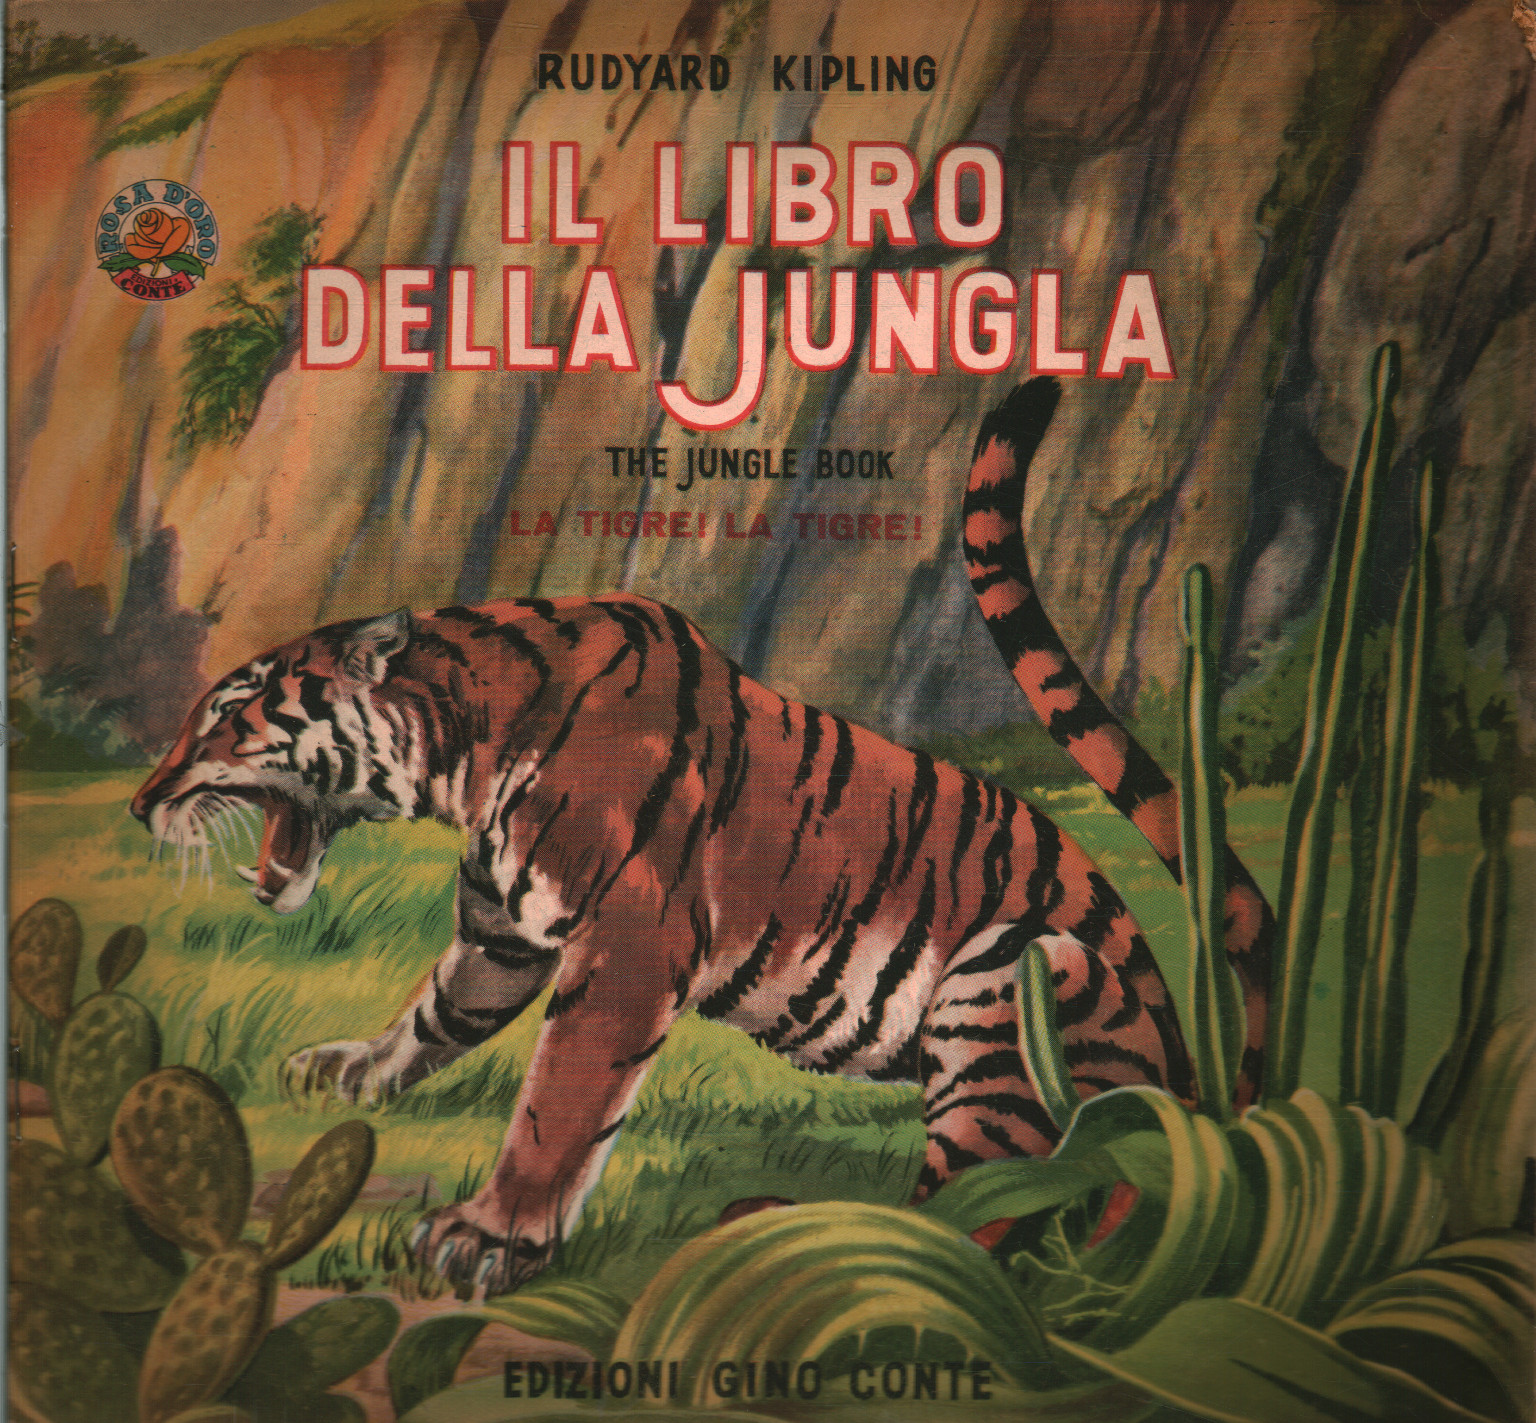 Il libro della jungla. La tigre! La tigre!, Rudyard Kipling